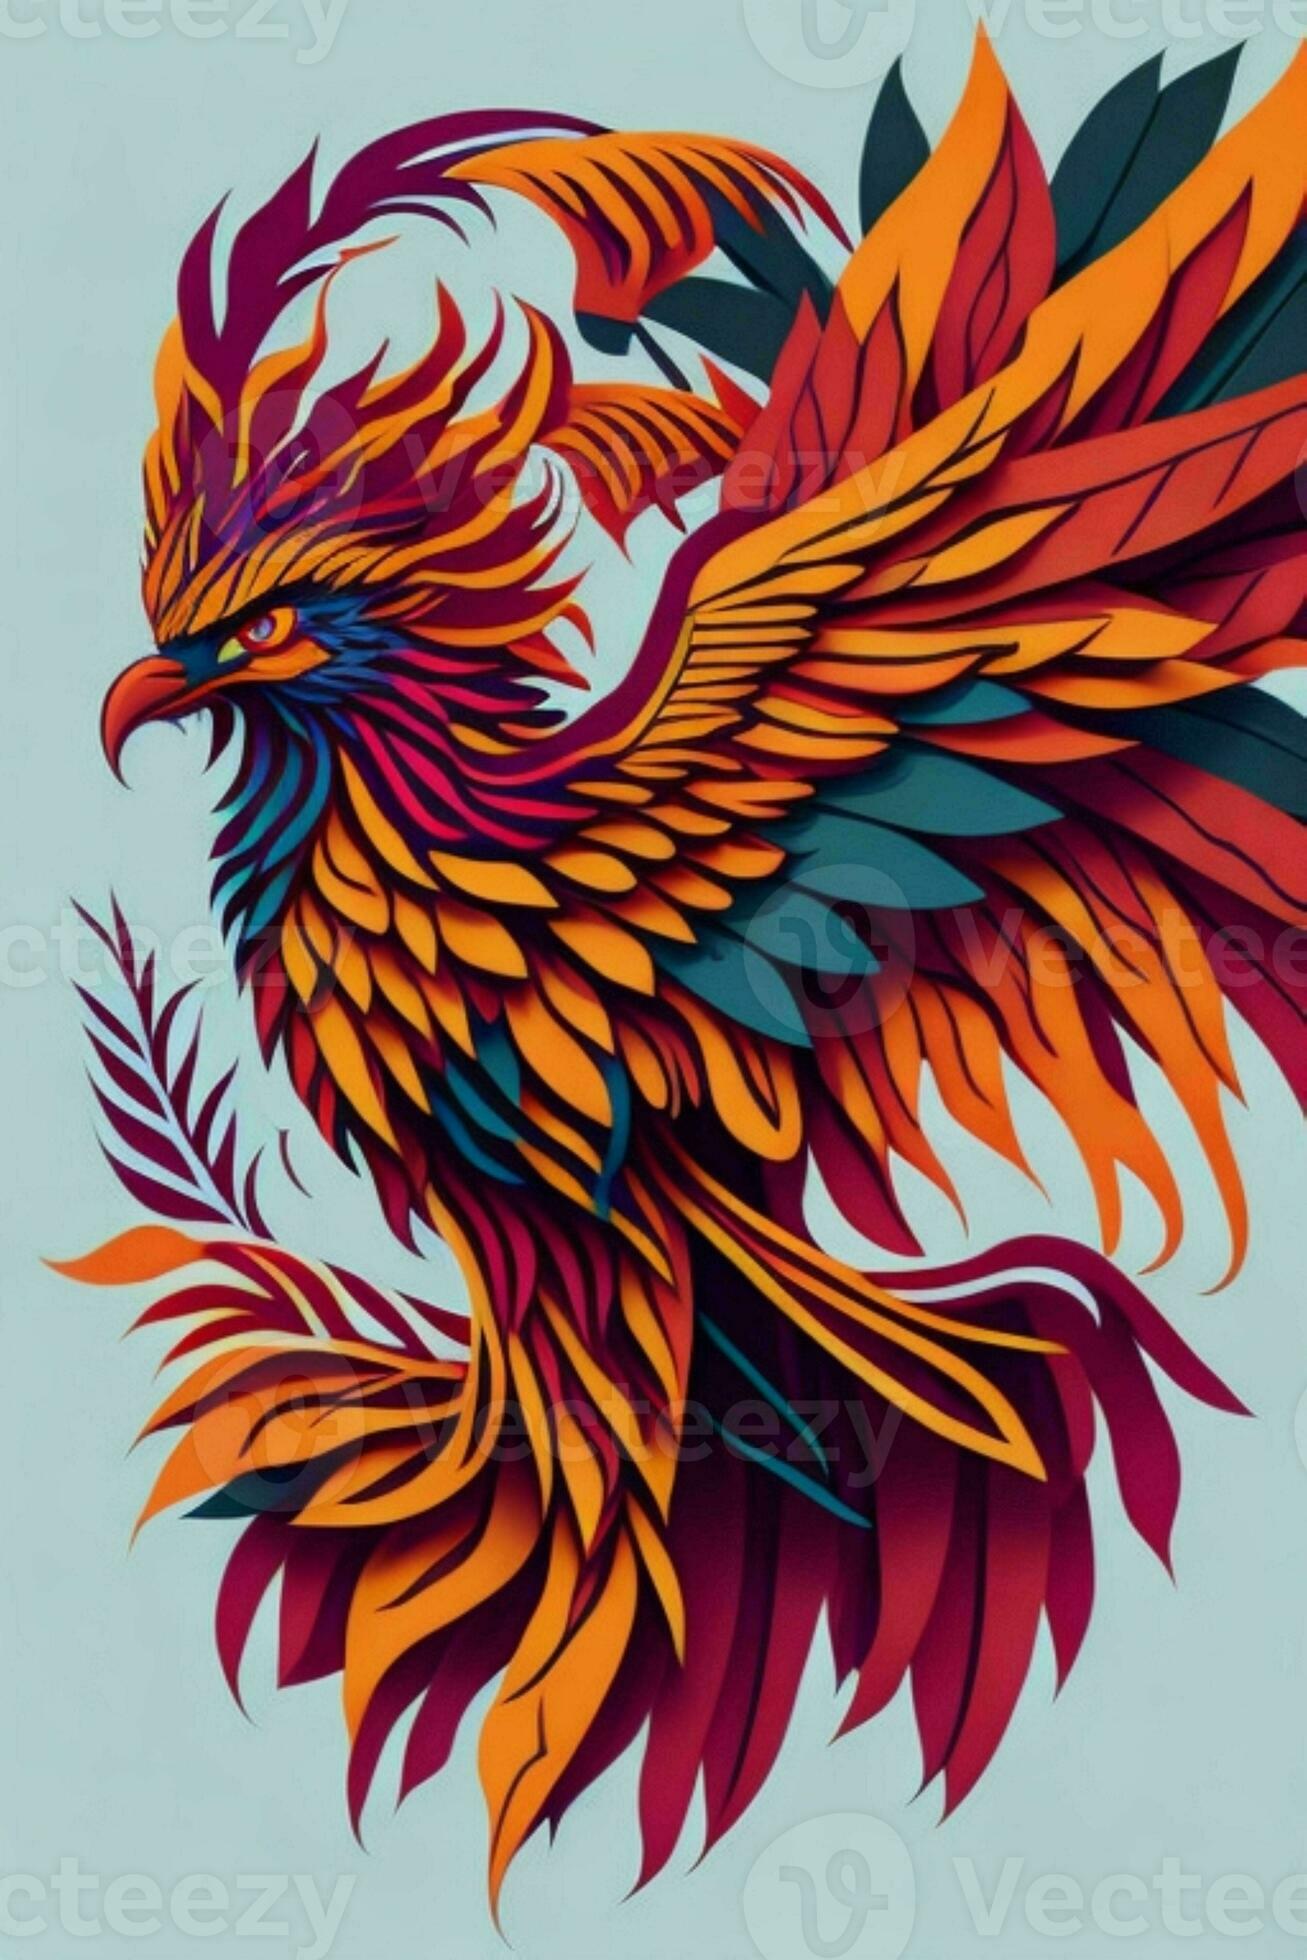 design phoenix shirt